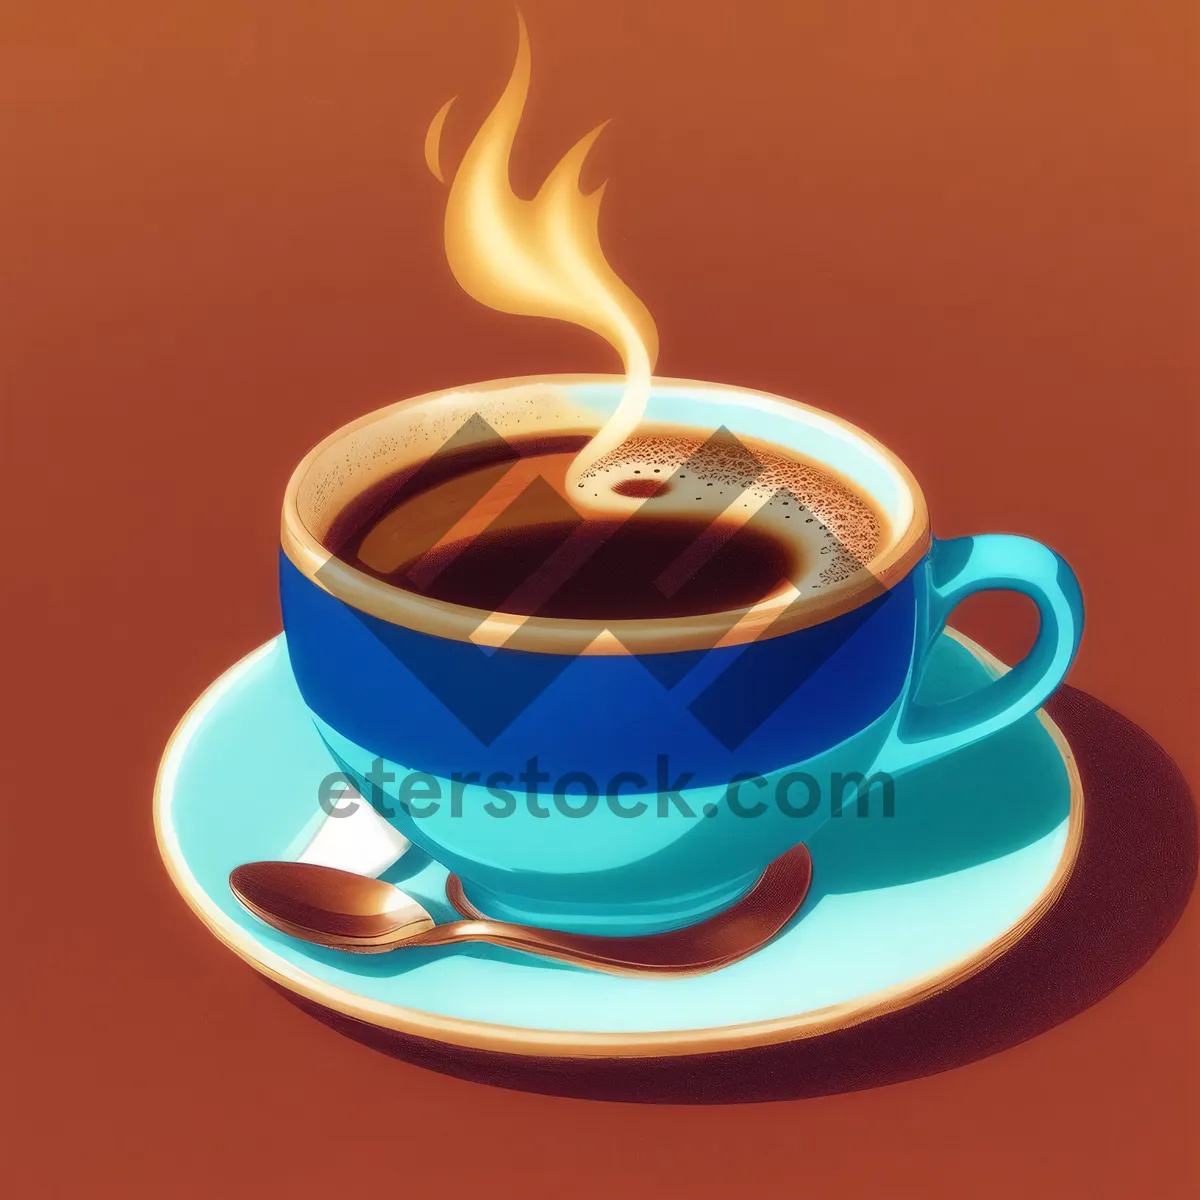 Picture of Dark Roast Breakfast: Hot Coffee Cup on Black Table